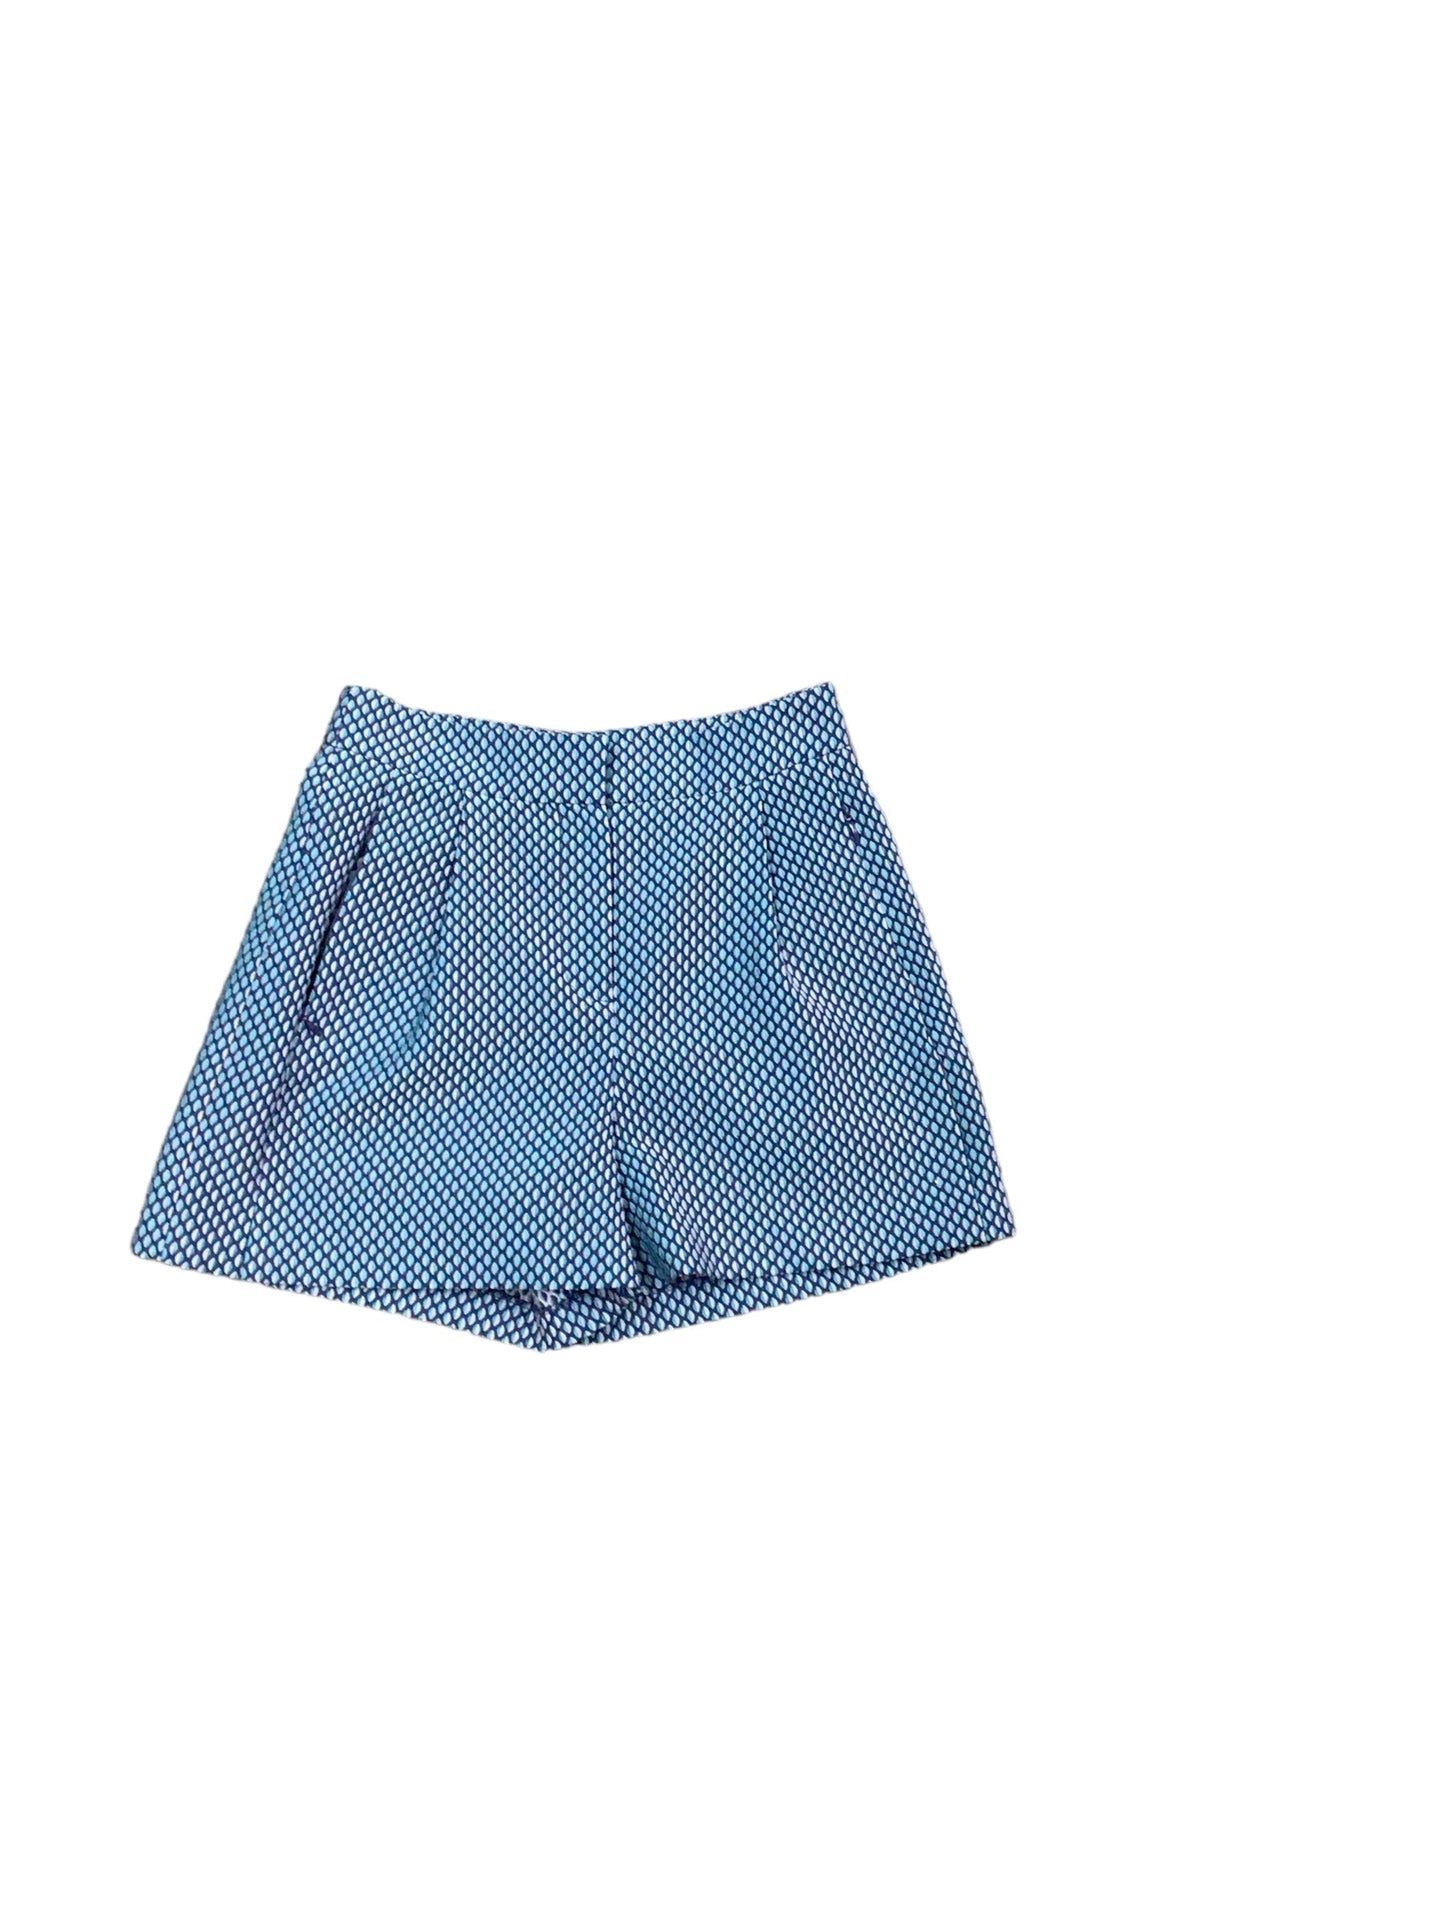 Shorts By Armani Exchange  Size: 0